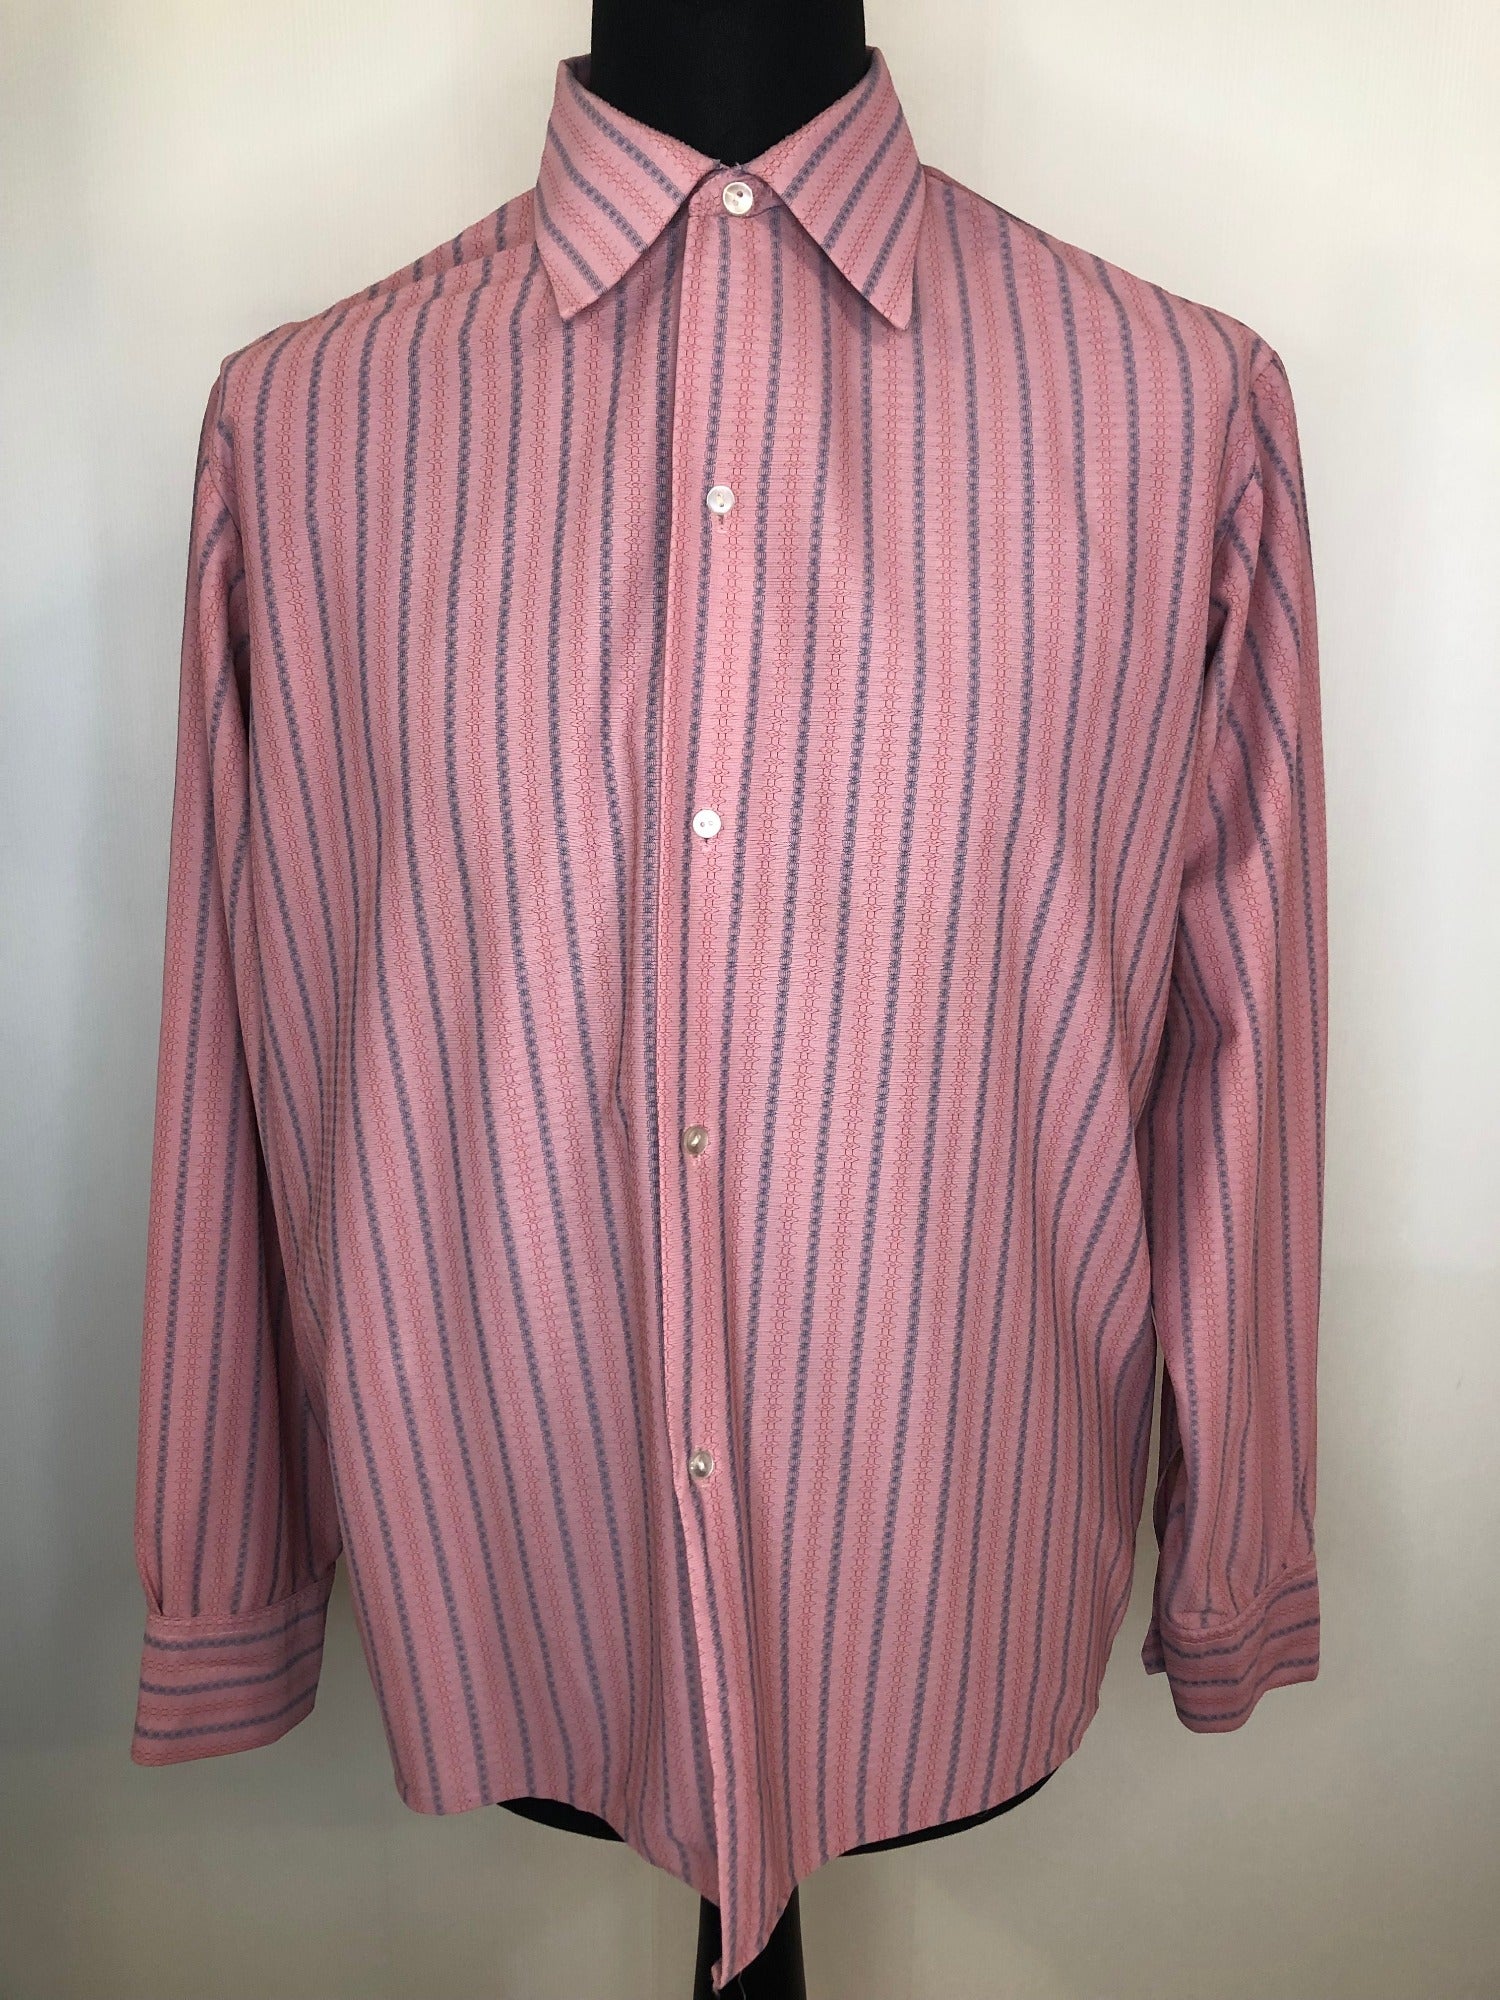 Vintage 1970s Stripe Patterned Shirt by Melmar Fashion - Size L - Urban ...